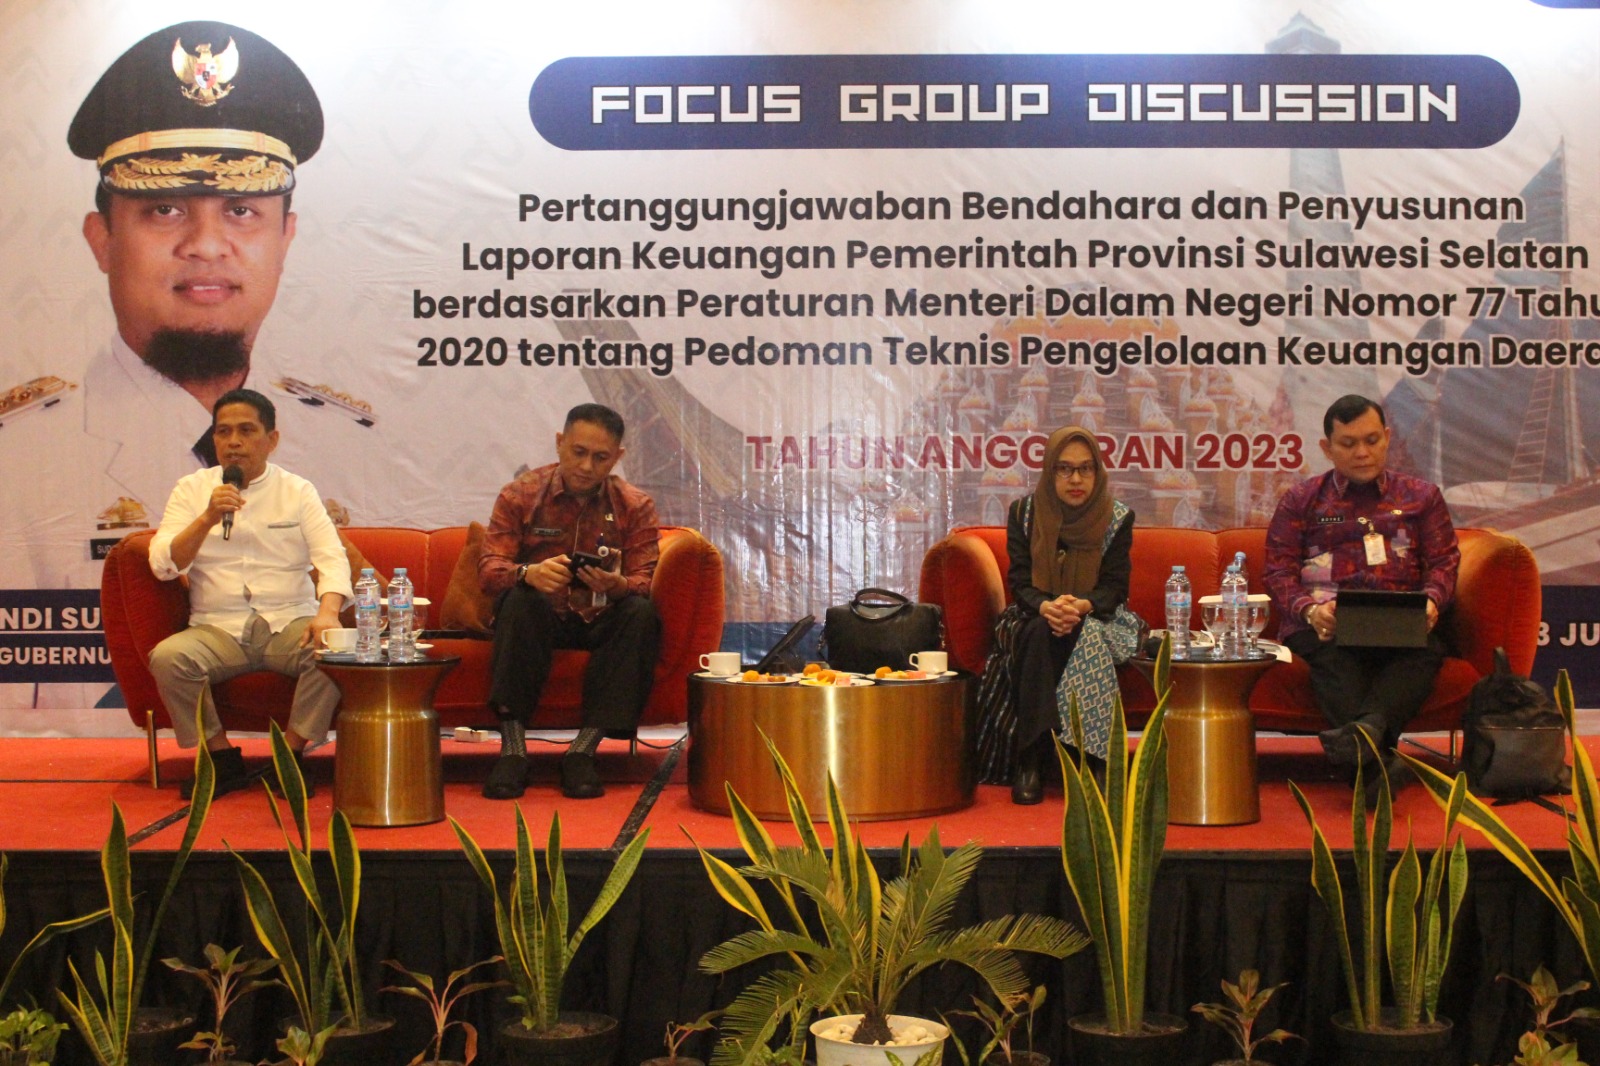 Focus Group Discussion 2023